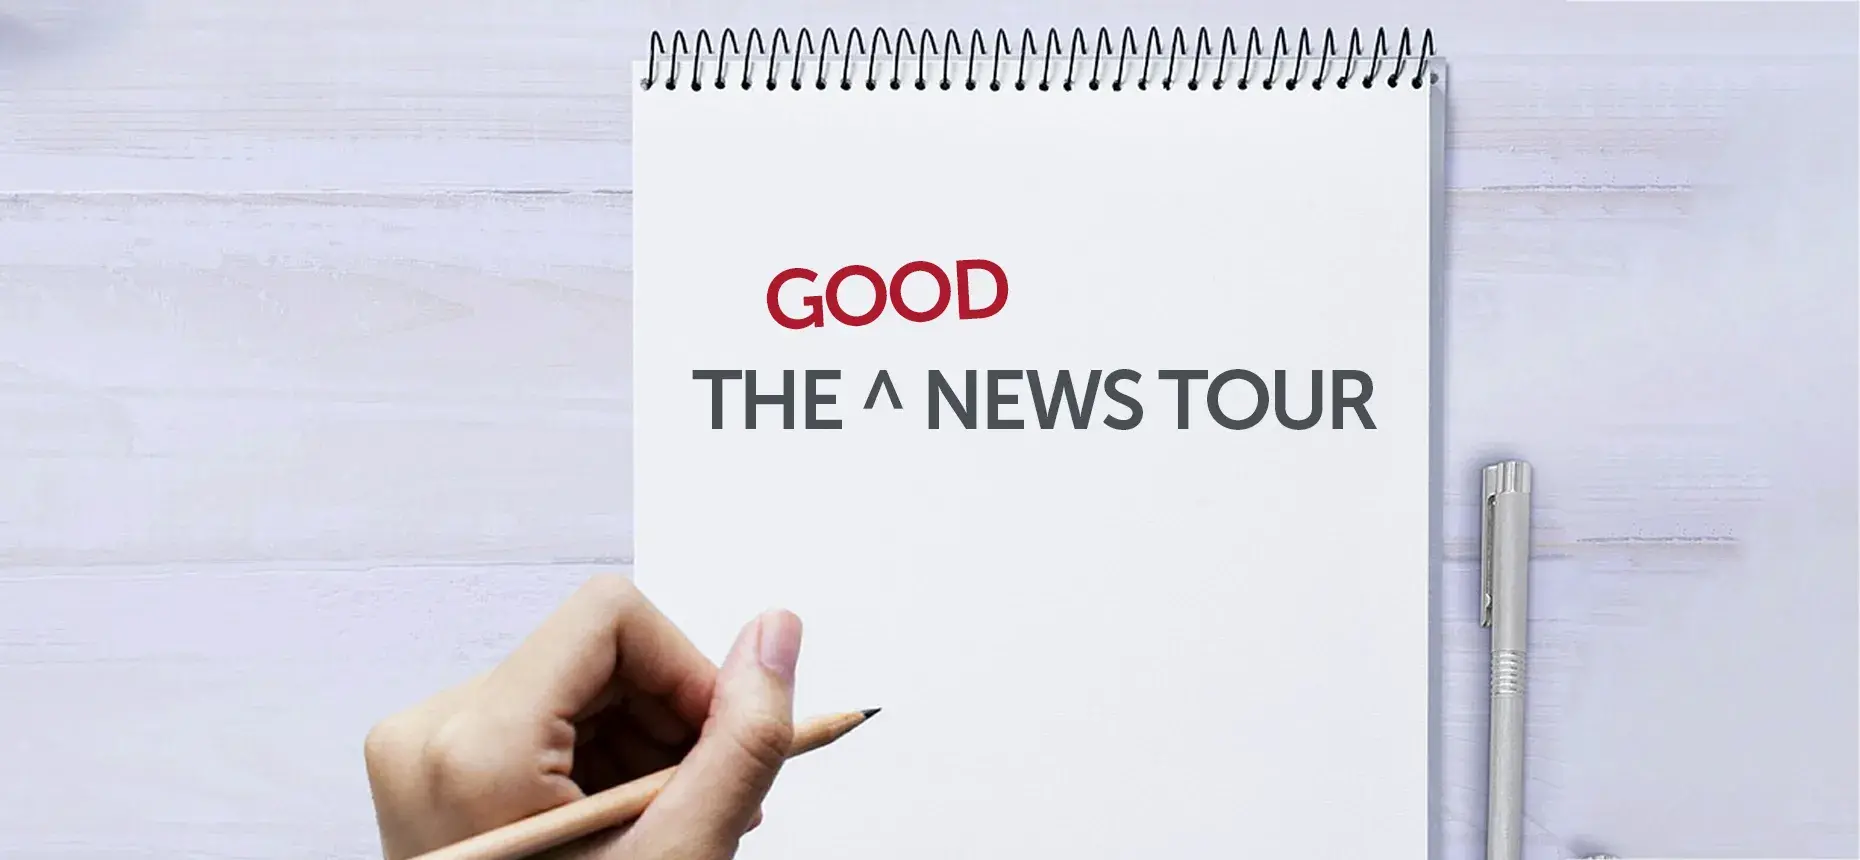 The good news tour